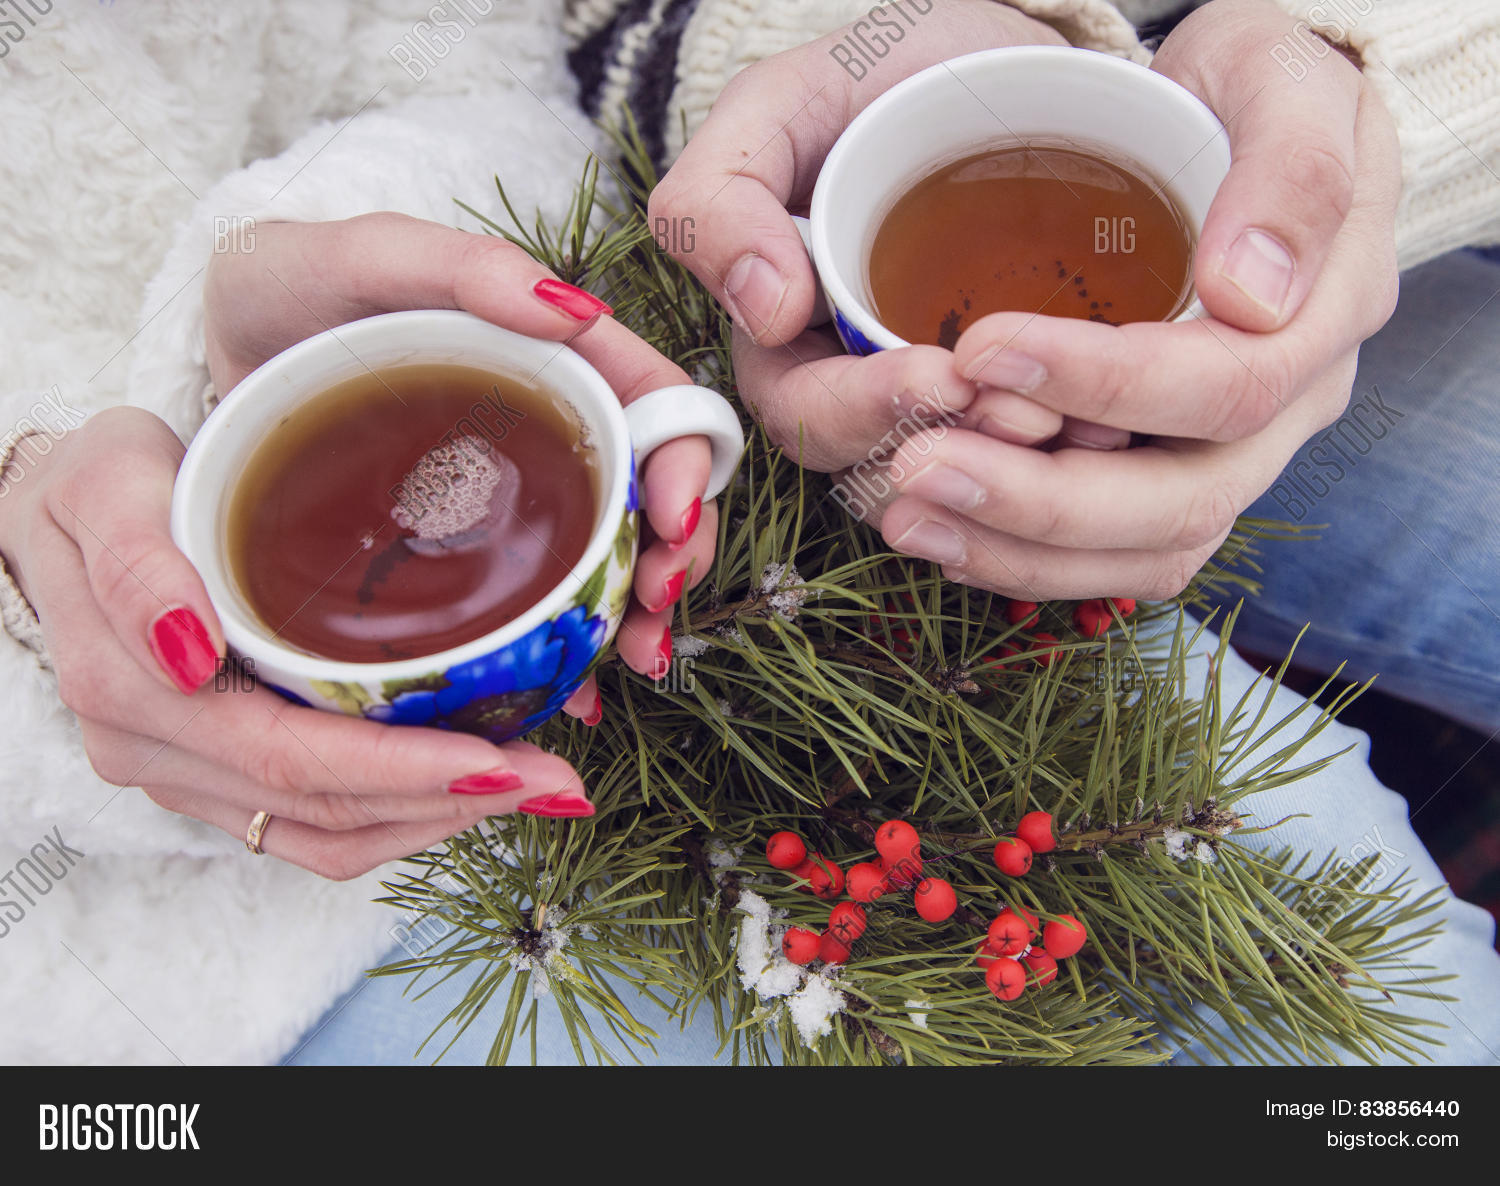 https://www.bigstockphoto.com/image-83856440/stock-photo-drinking-tea-together